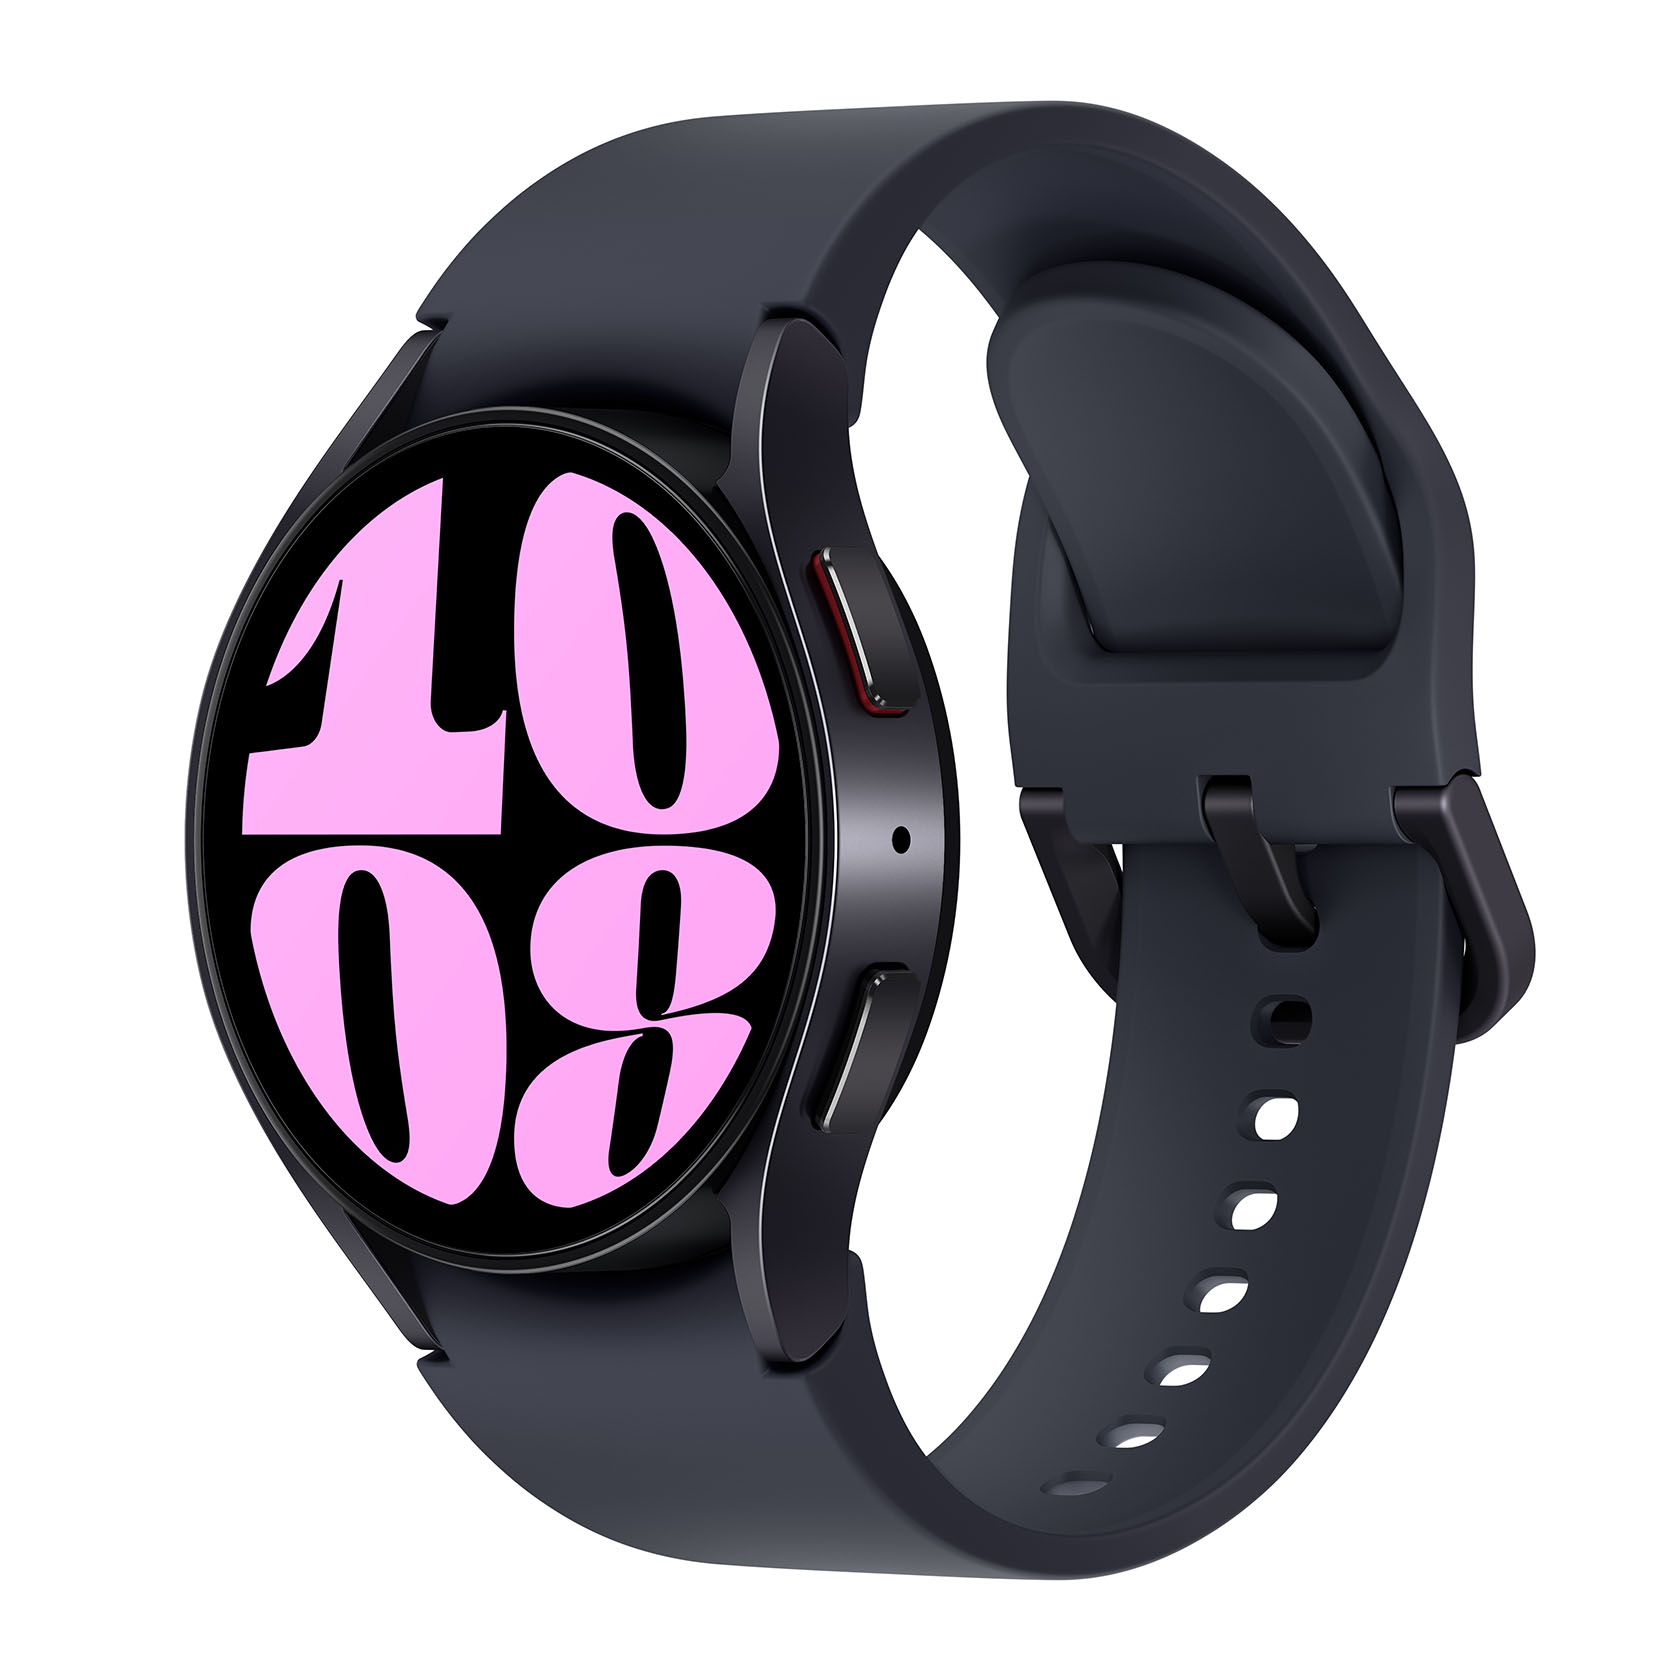 Smart Watches - Apple Watch, Samsung, Google, Garmin & More - JB Hi-Fi